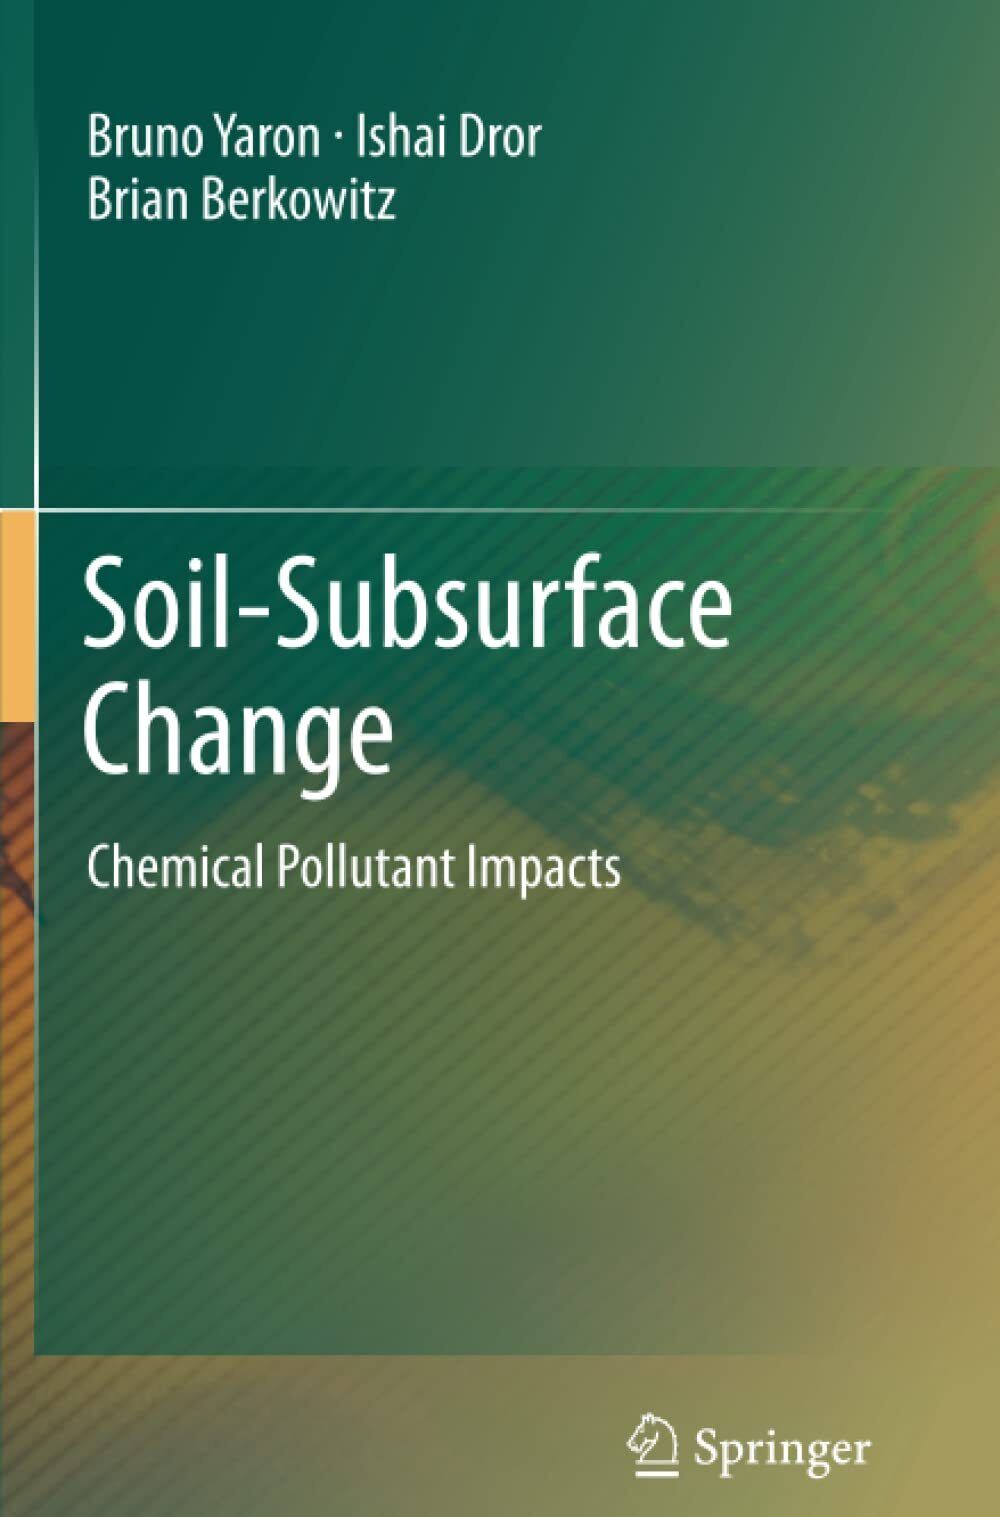 Soil-Subsurface Change - Brian Berkowitz, Ishai Dror, Bruno Yaron - 2014